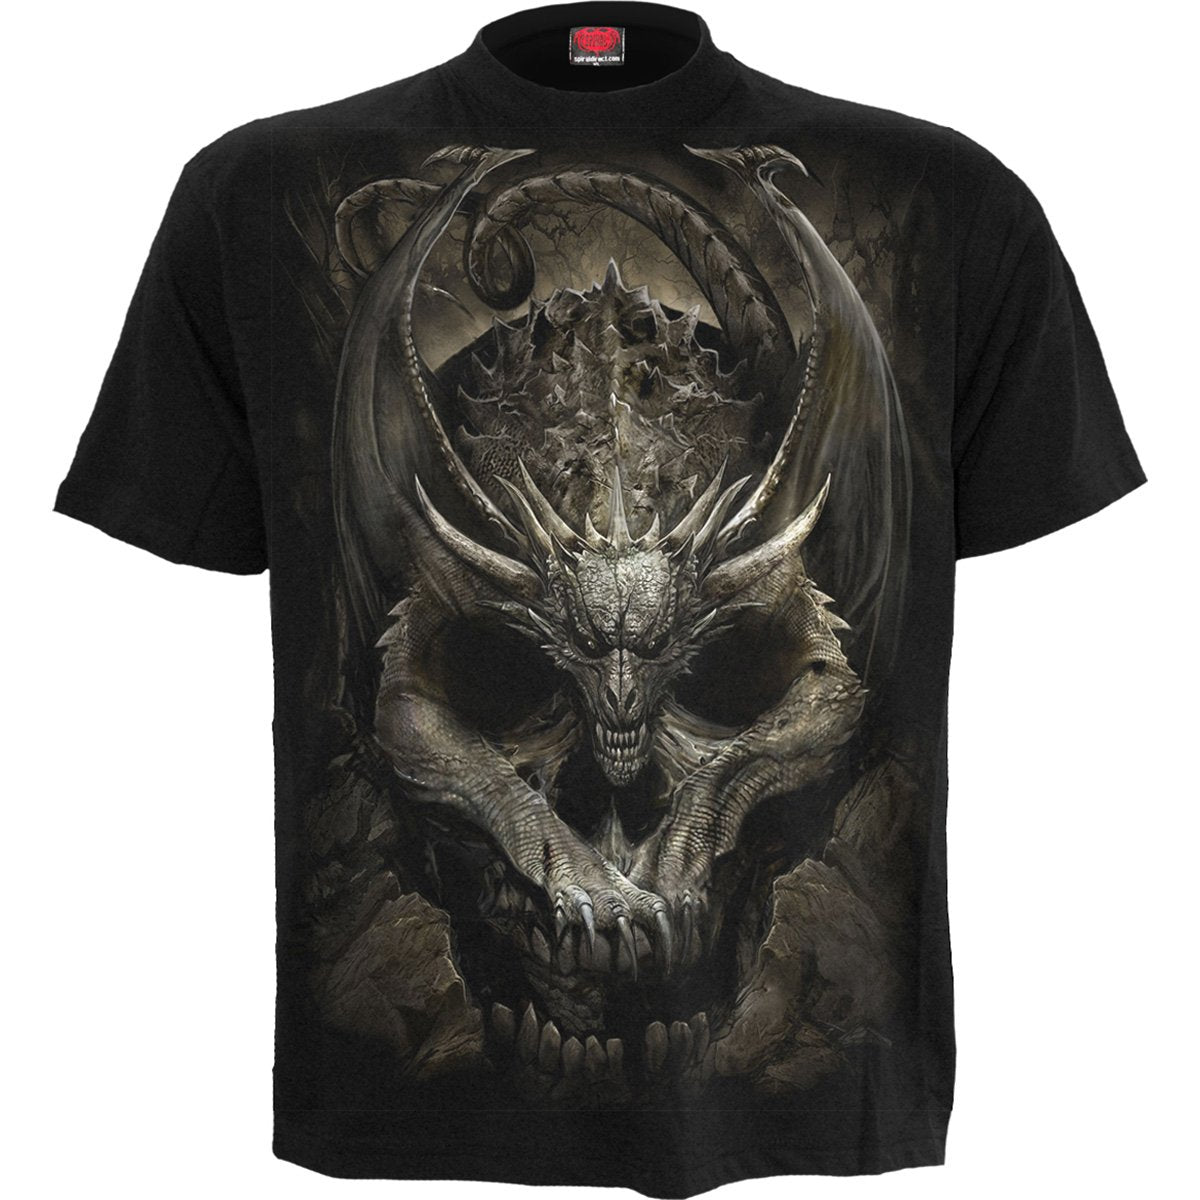 DRACO SKULL - T-Shirt Black - Spiral USA